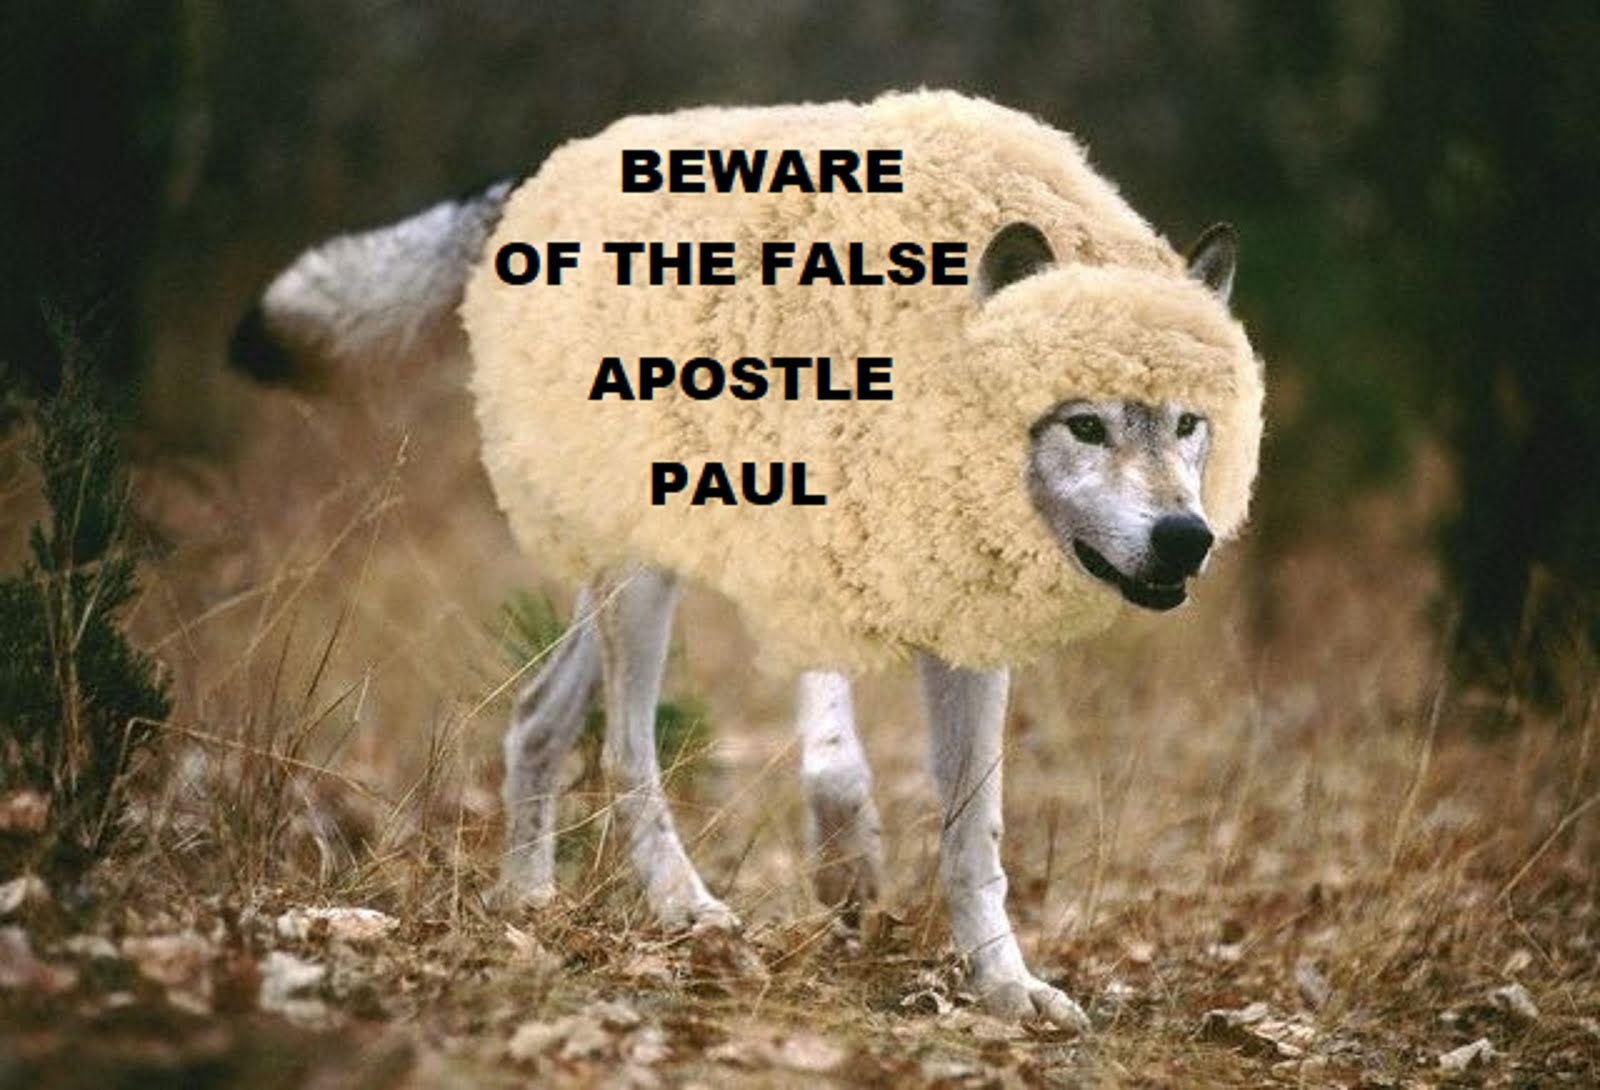 BEWARE OF THE FALSE APOSTLE PAUL